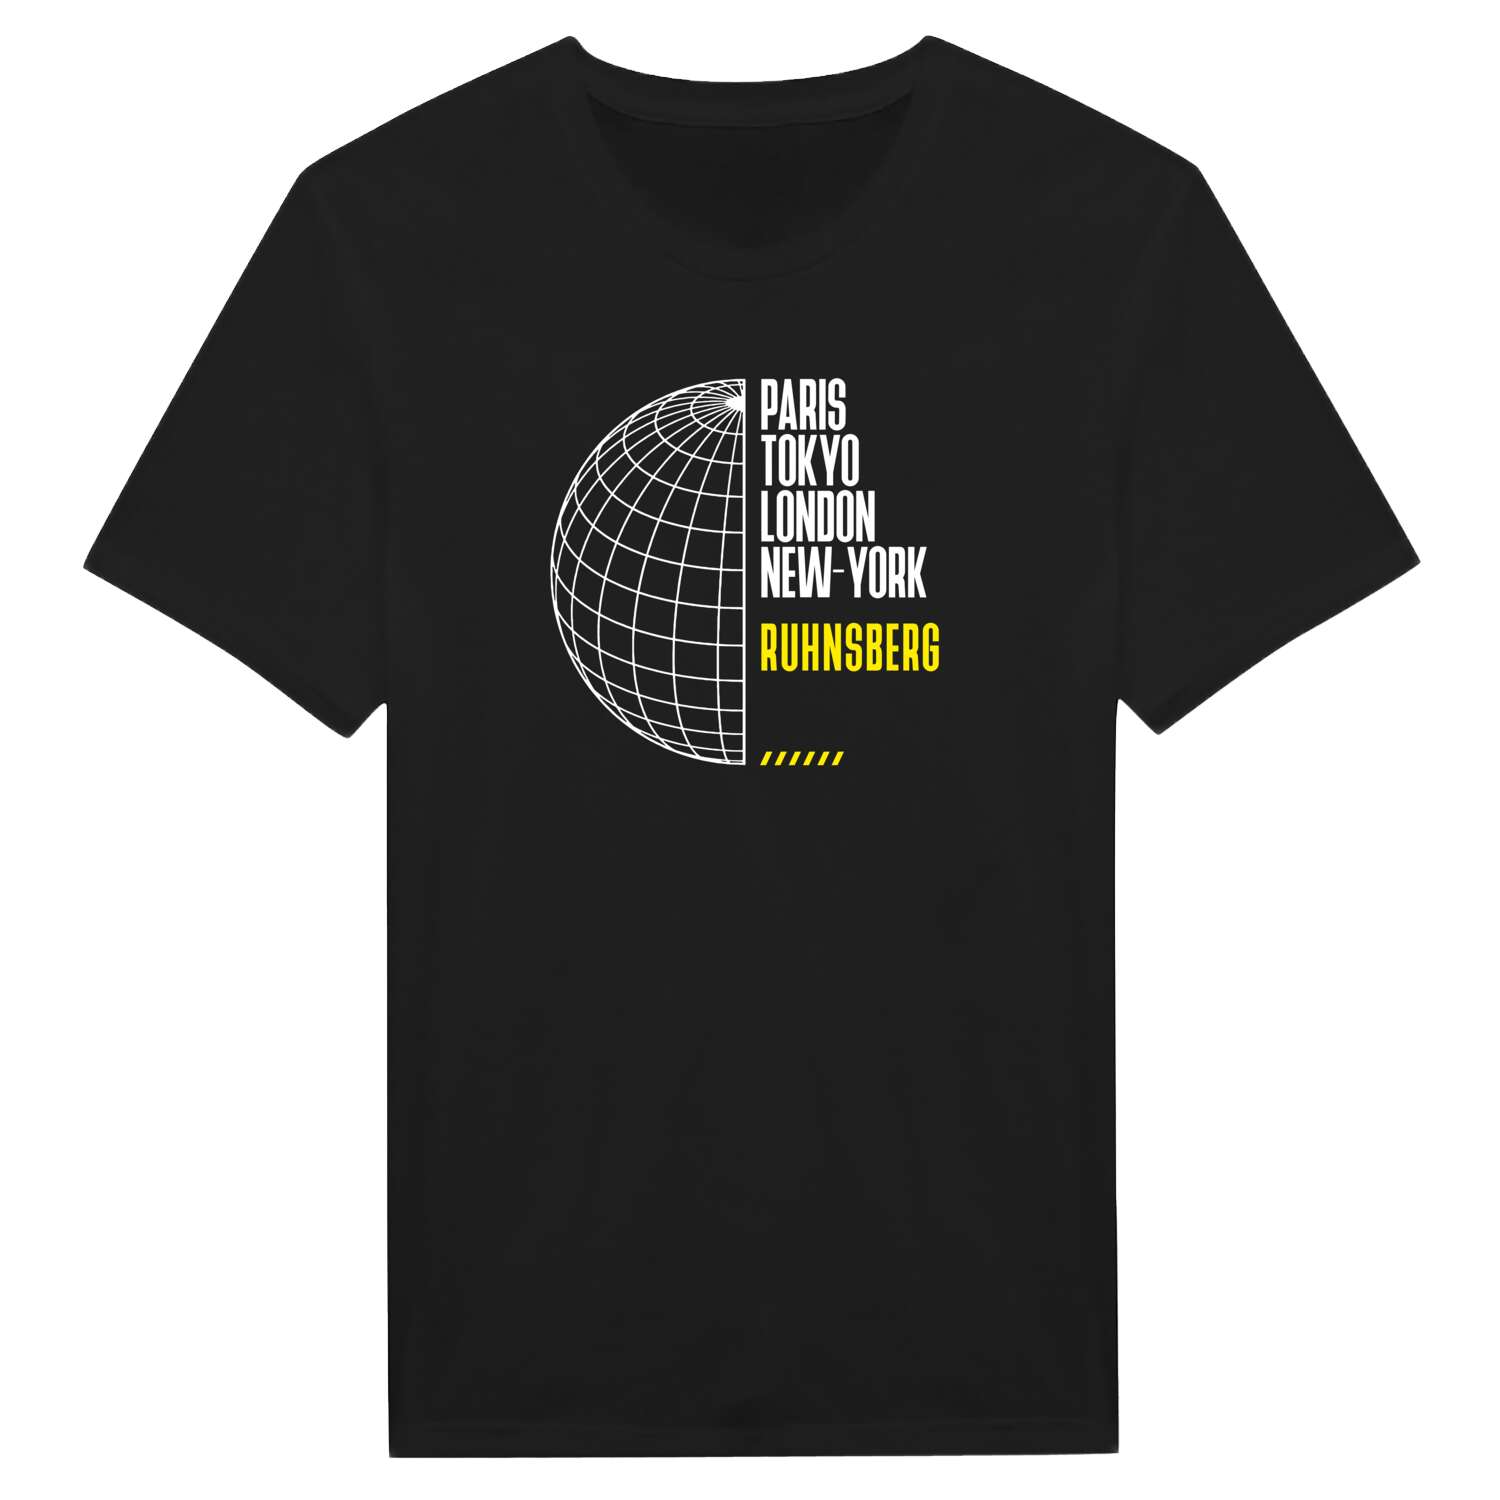 Ruhnsberg T-Shirt »Paris Tokyo London«